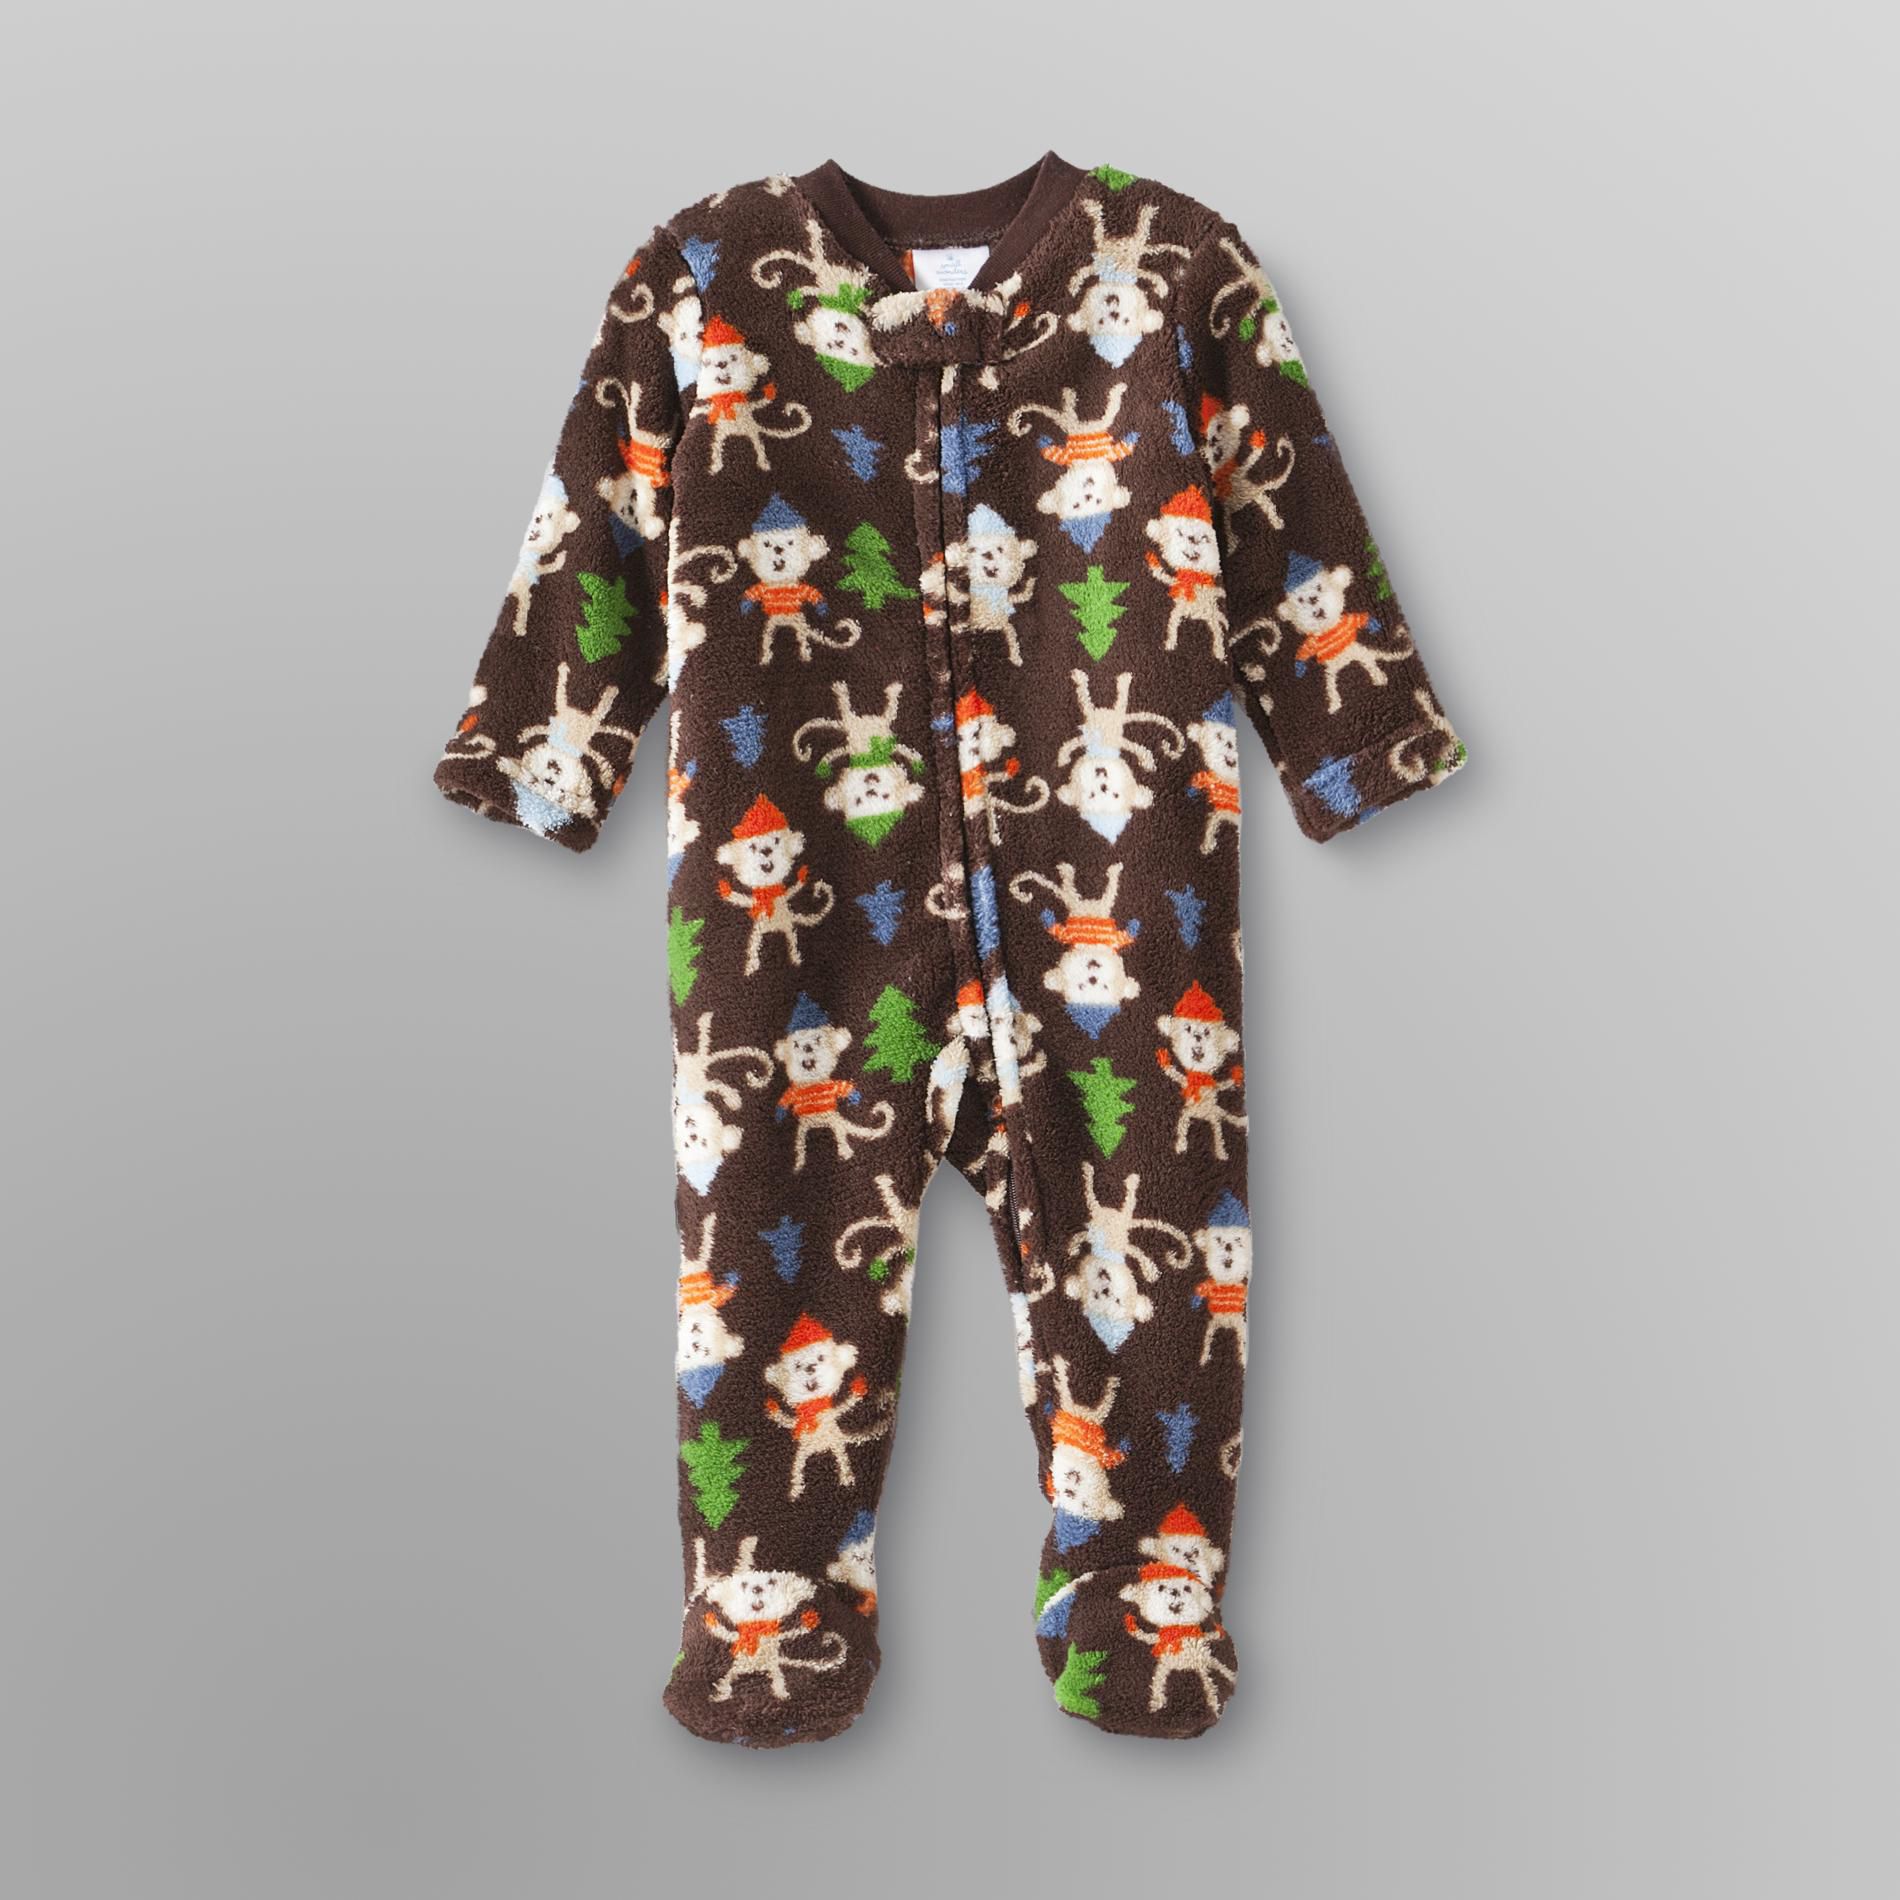 Small Wonders Infant Boy's Sleeper Pajamas - Monkey